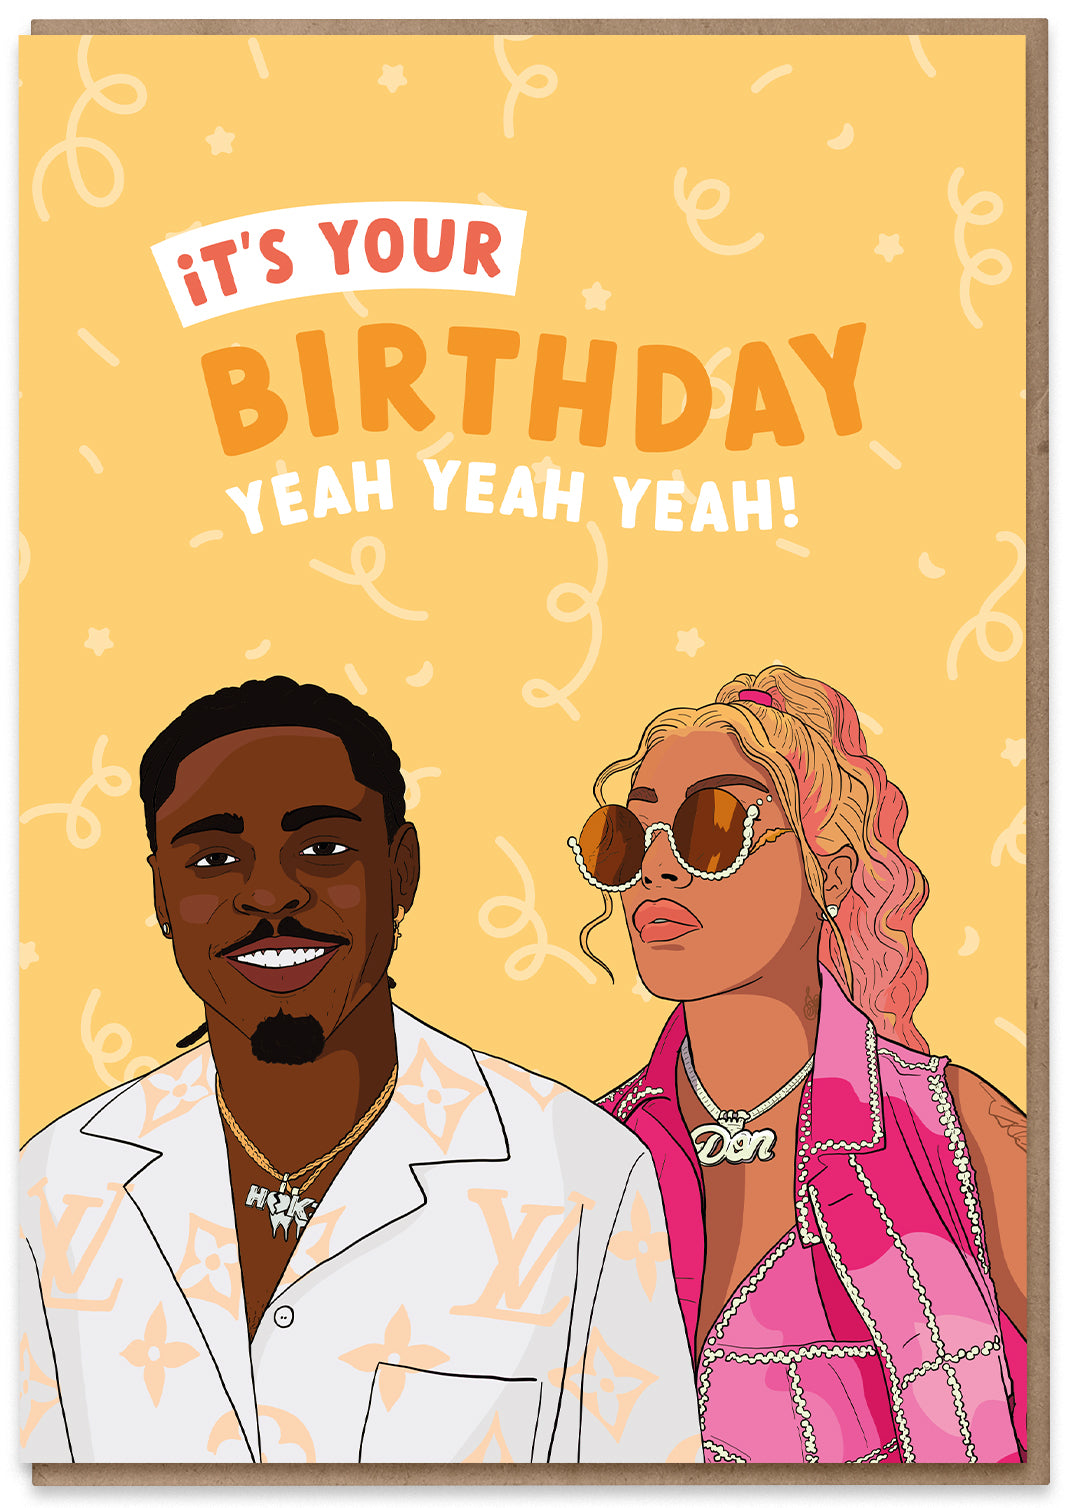 It's Your Birthday! (Audio Card)